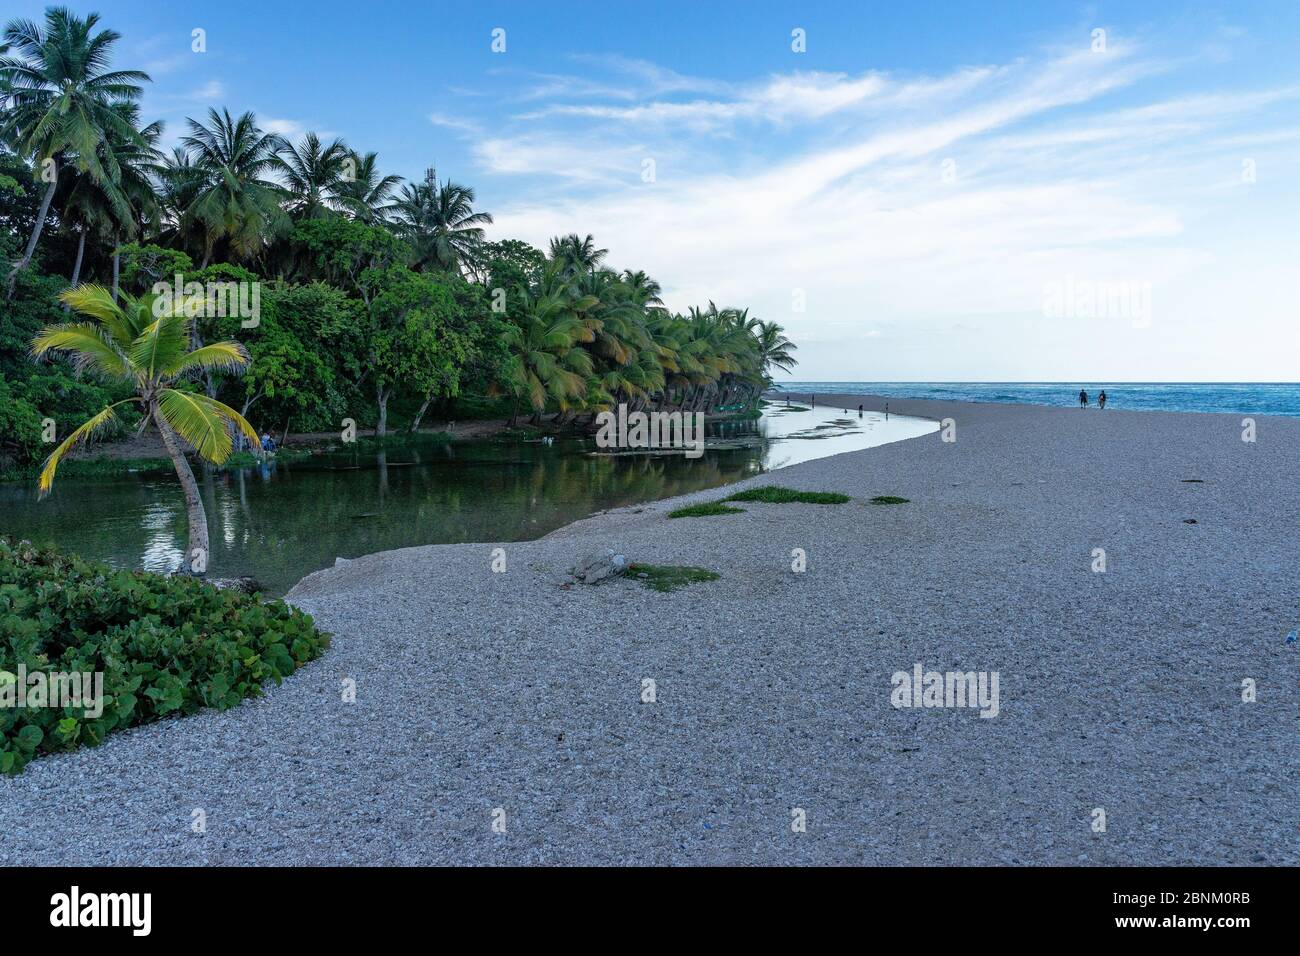 America, Caribbean, Greater Antilles, Dominican Republic, Barahona, Los Patos, Los Patos Beach near Barahona Stock Photo